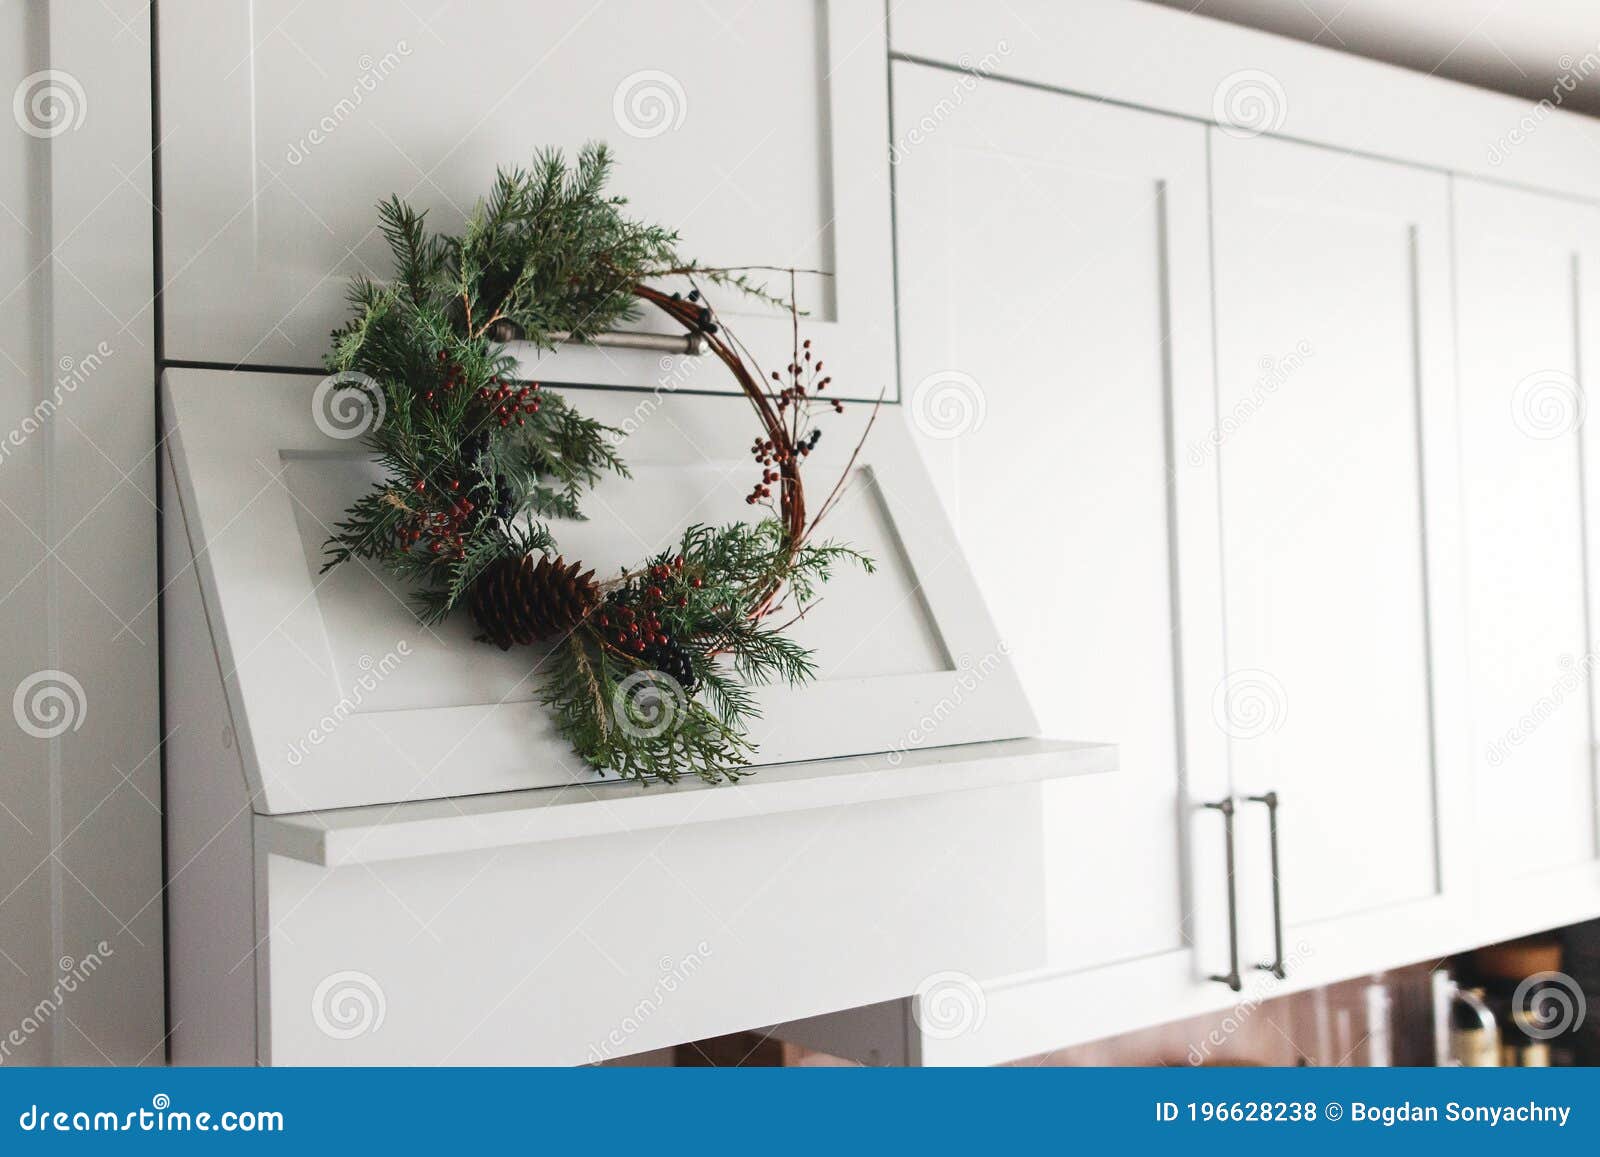 Rustic Christmas Wreath Hanging On Modern Kitchen Hood, Festive Holiday